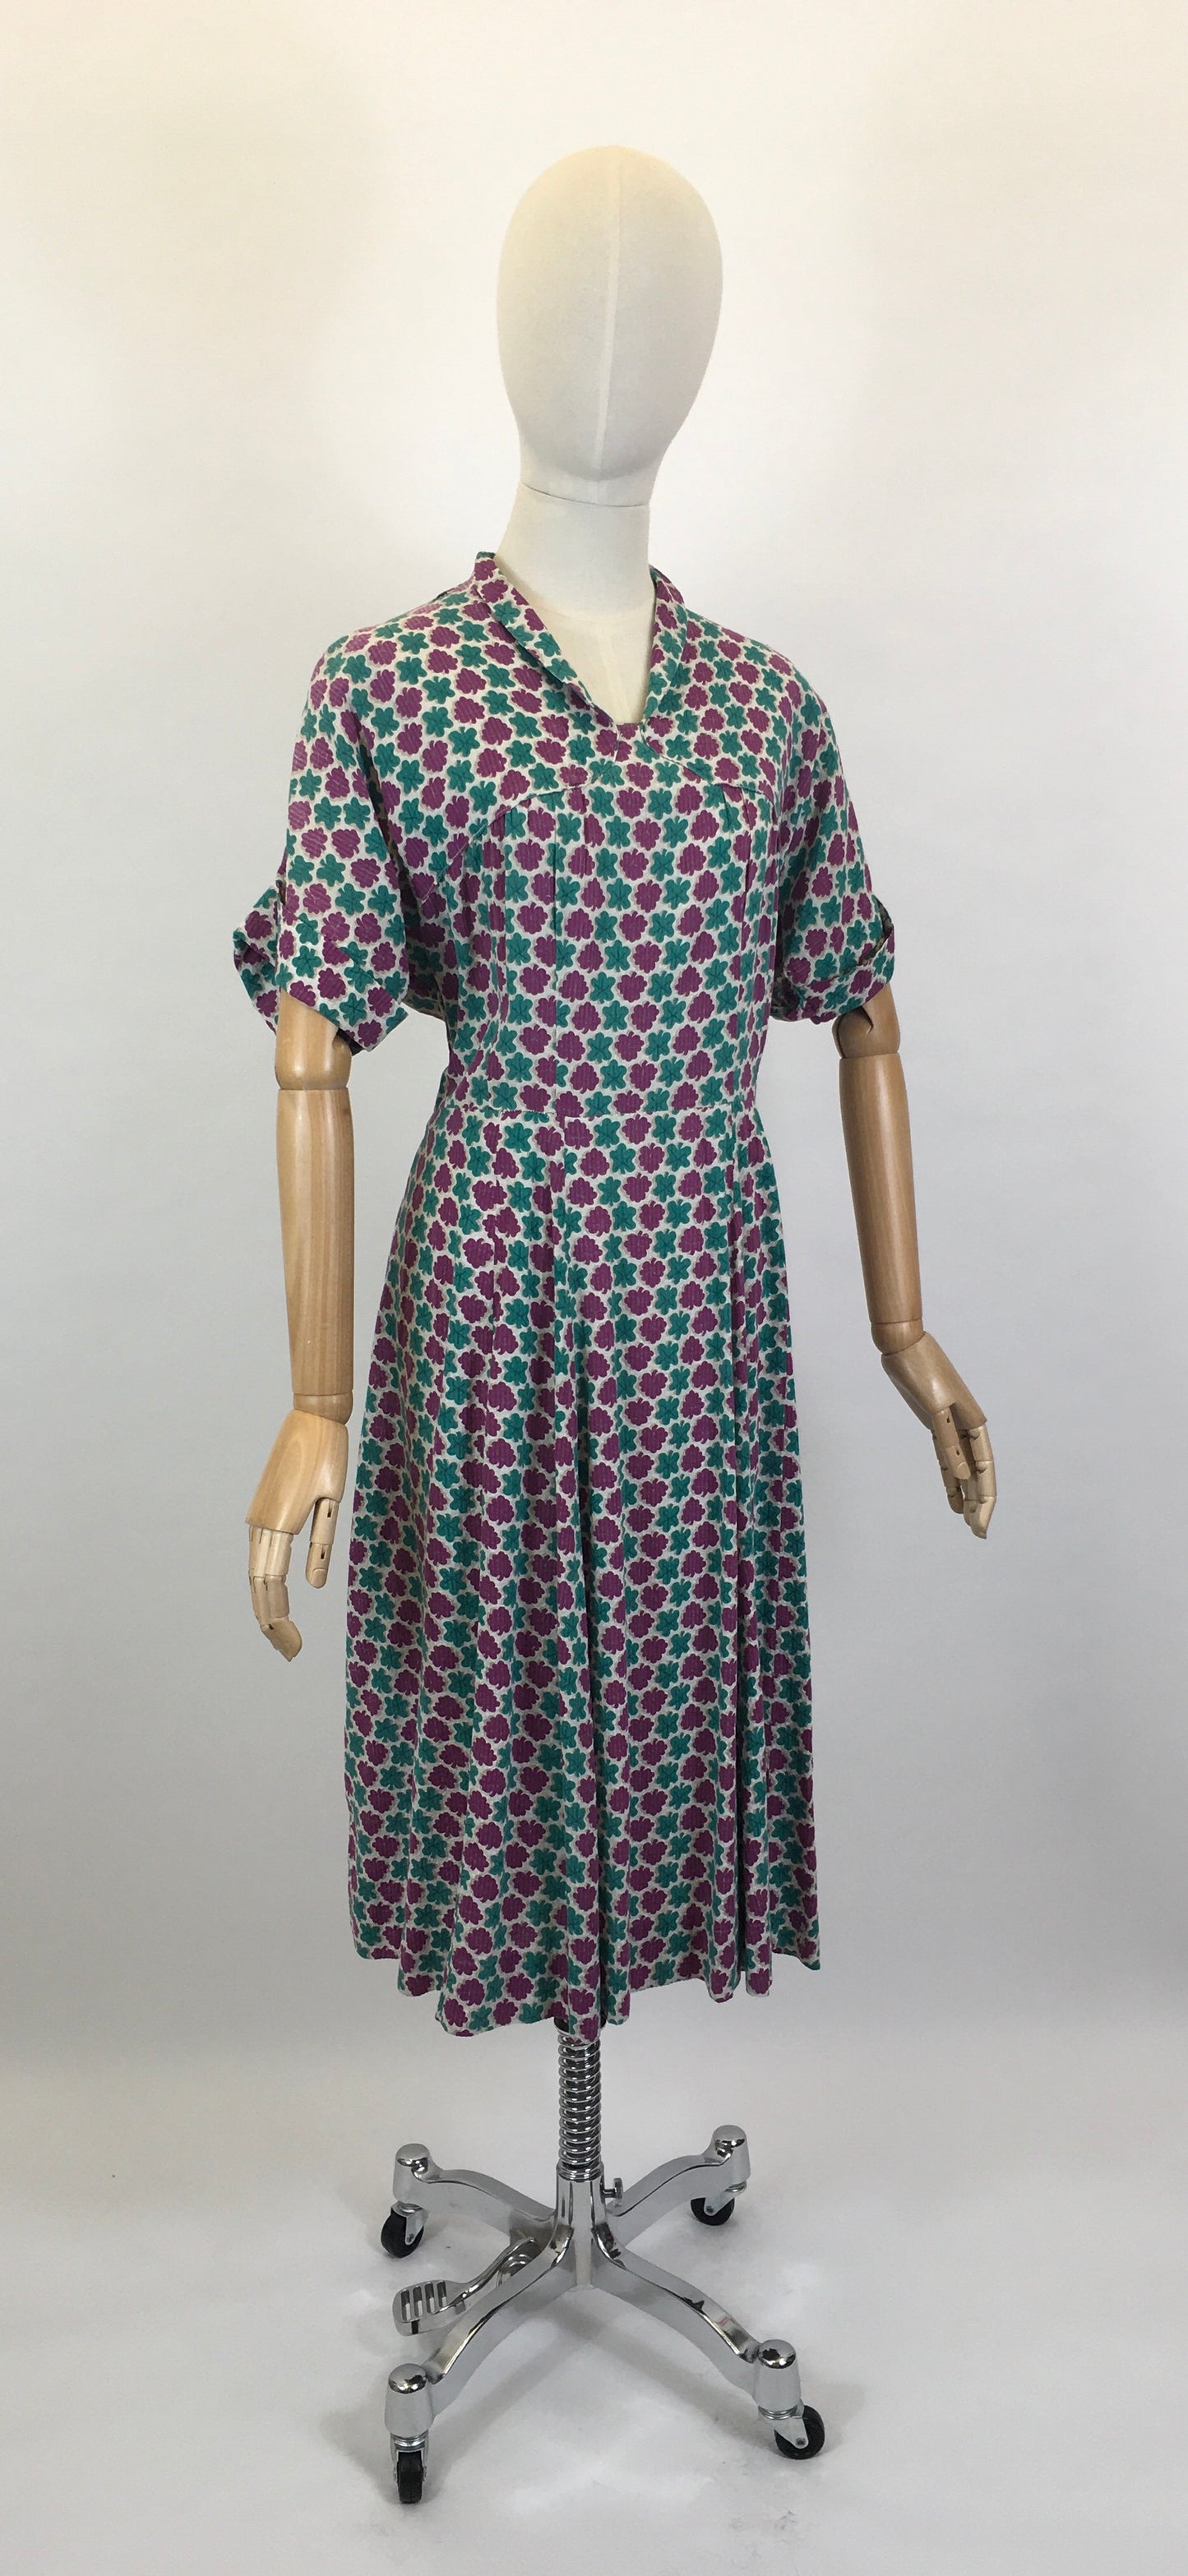 Original 1940’s Darling Day Dress  As is - In Purple, Turquoise & White Seersucker